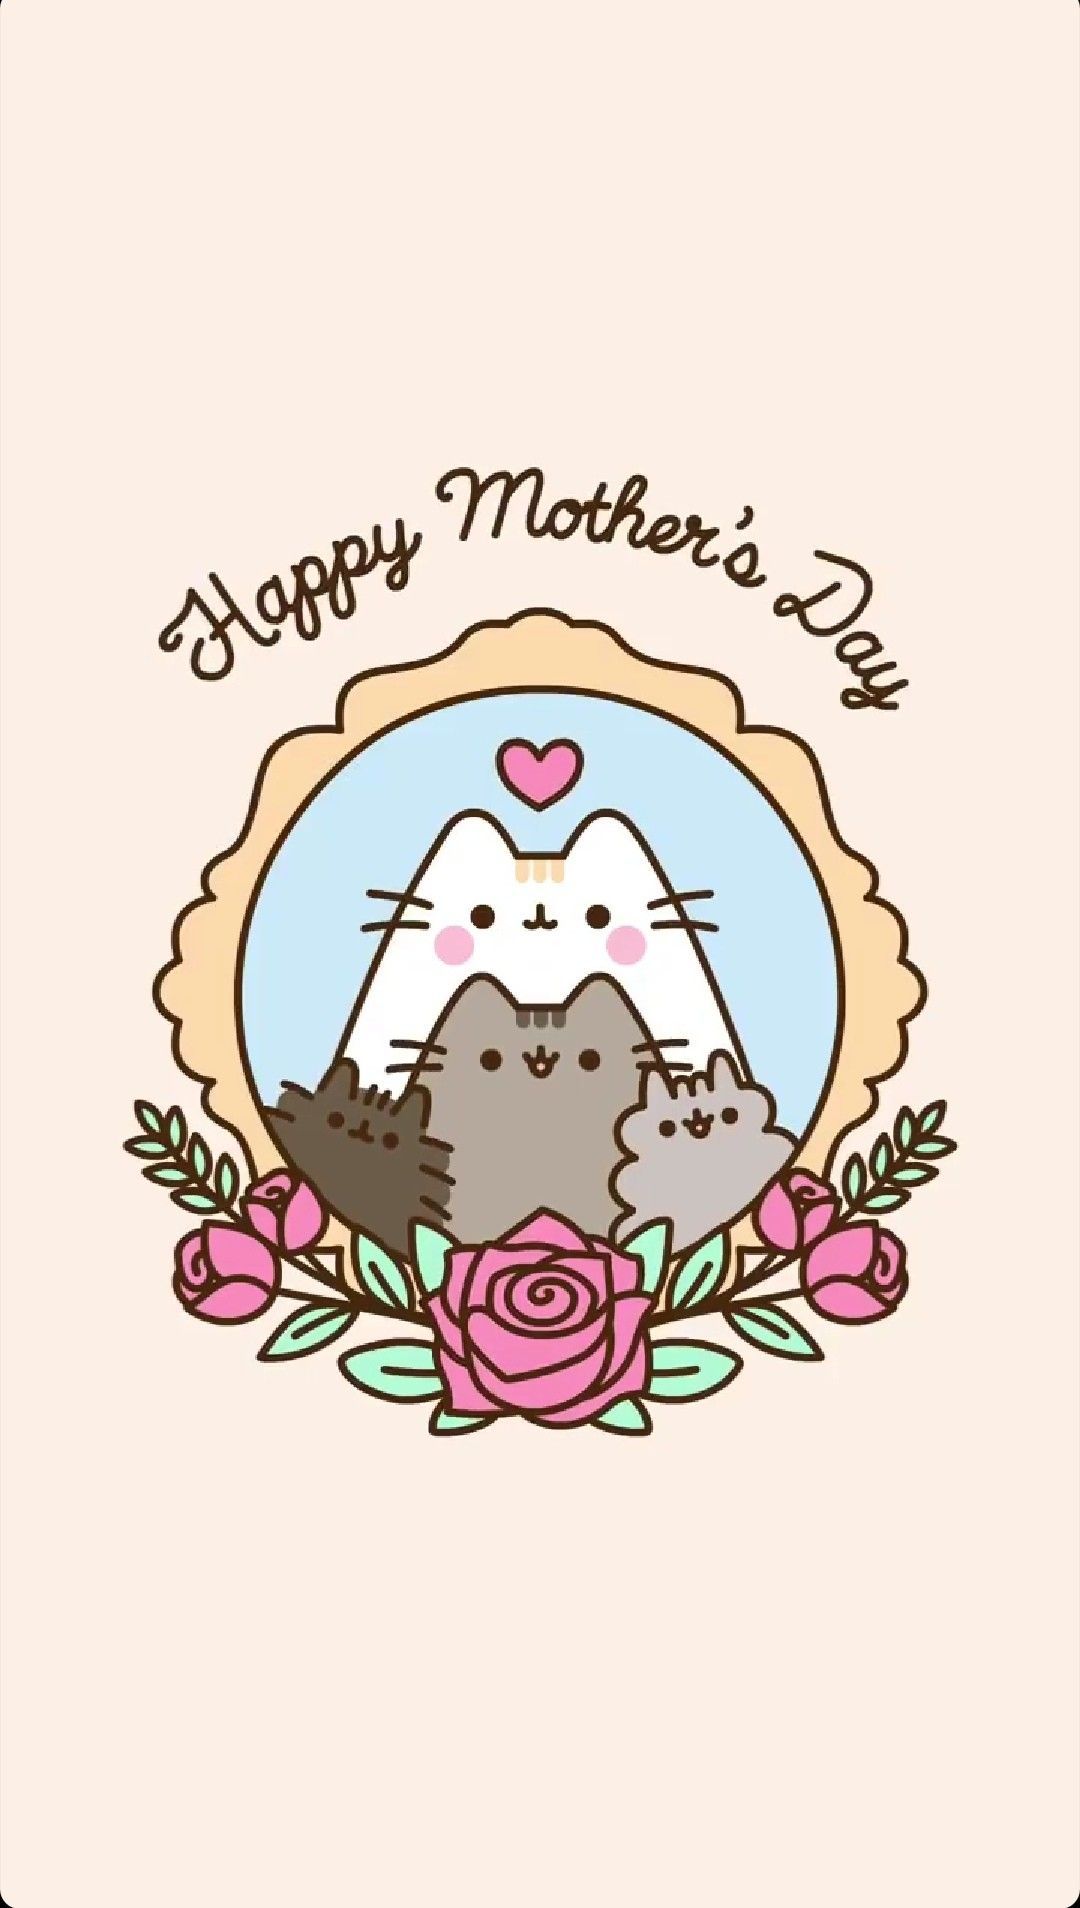 wallpaper #motherday #pusheen #cat #flowers #family. Pusheen cute